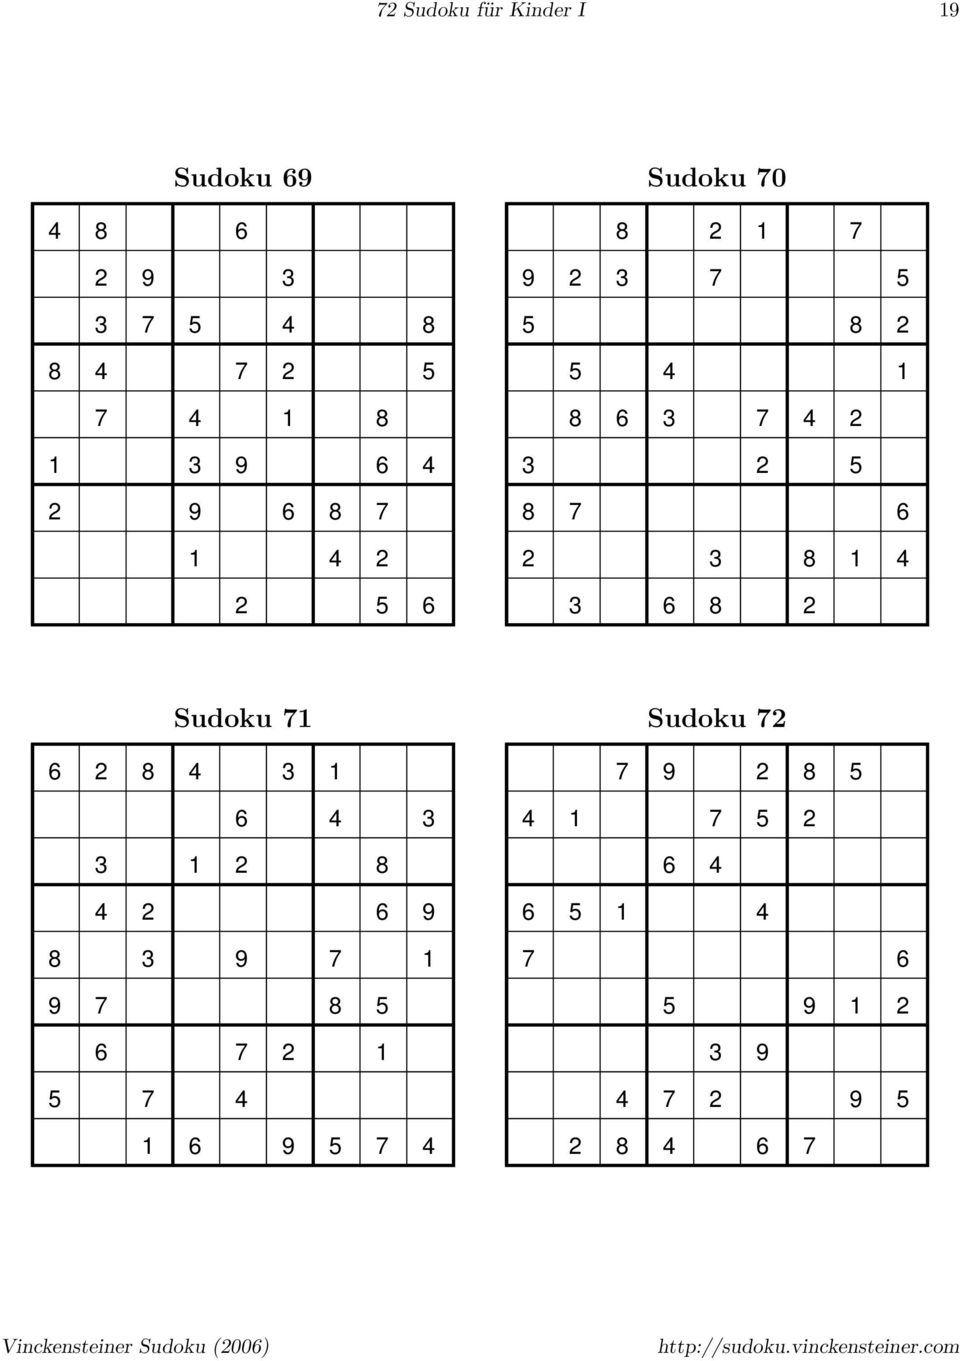 7 6 3 8 3 6 8 Sudoku 7 6 8 3 6 3 3 8 6 9 8 3 9 7 9 7 8 5 6 7